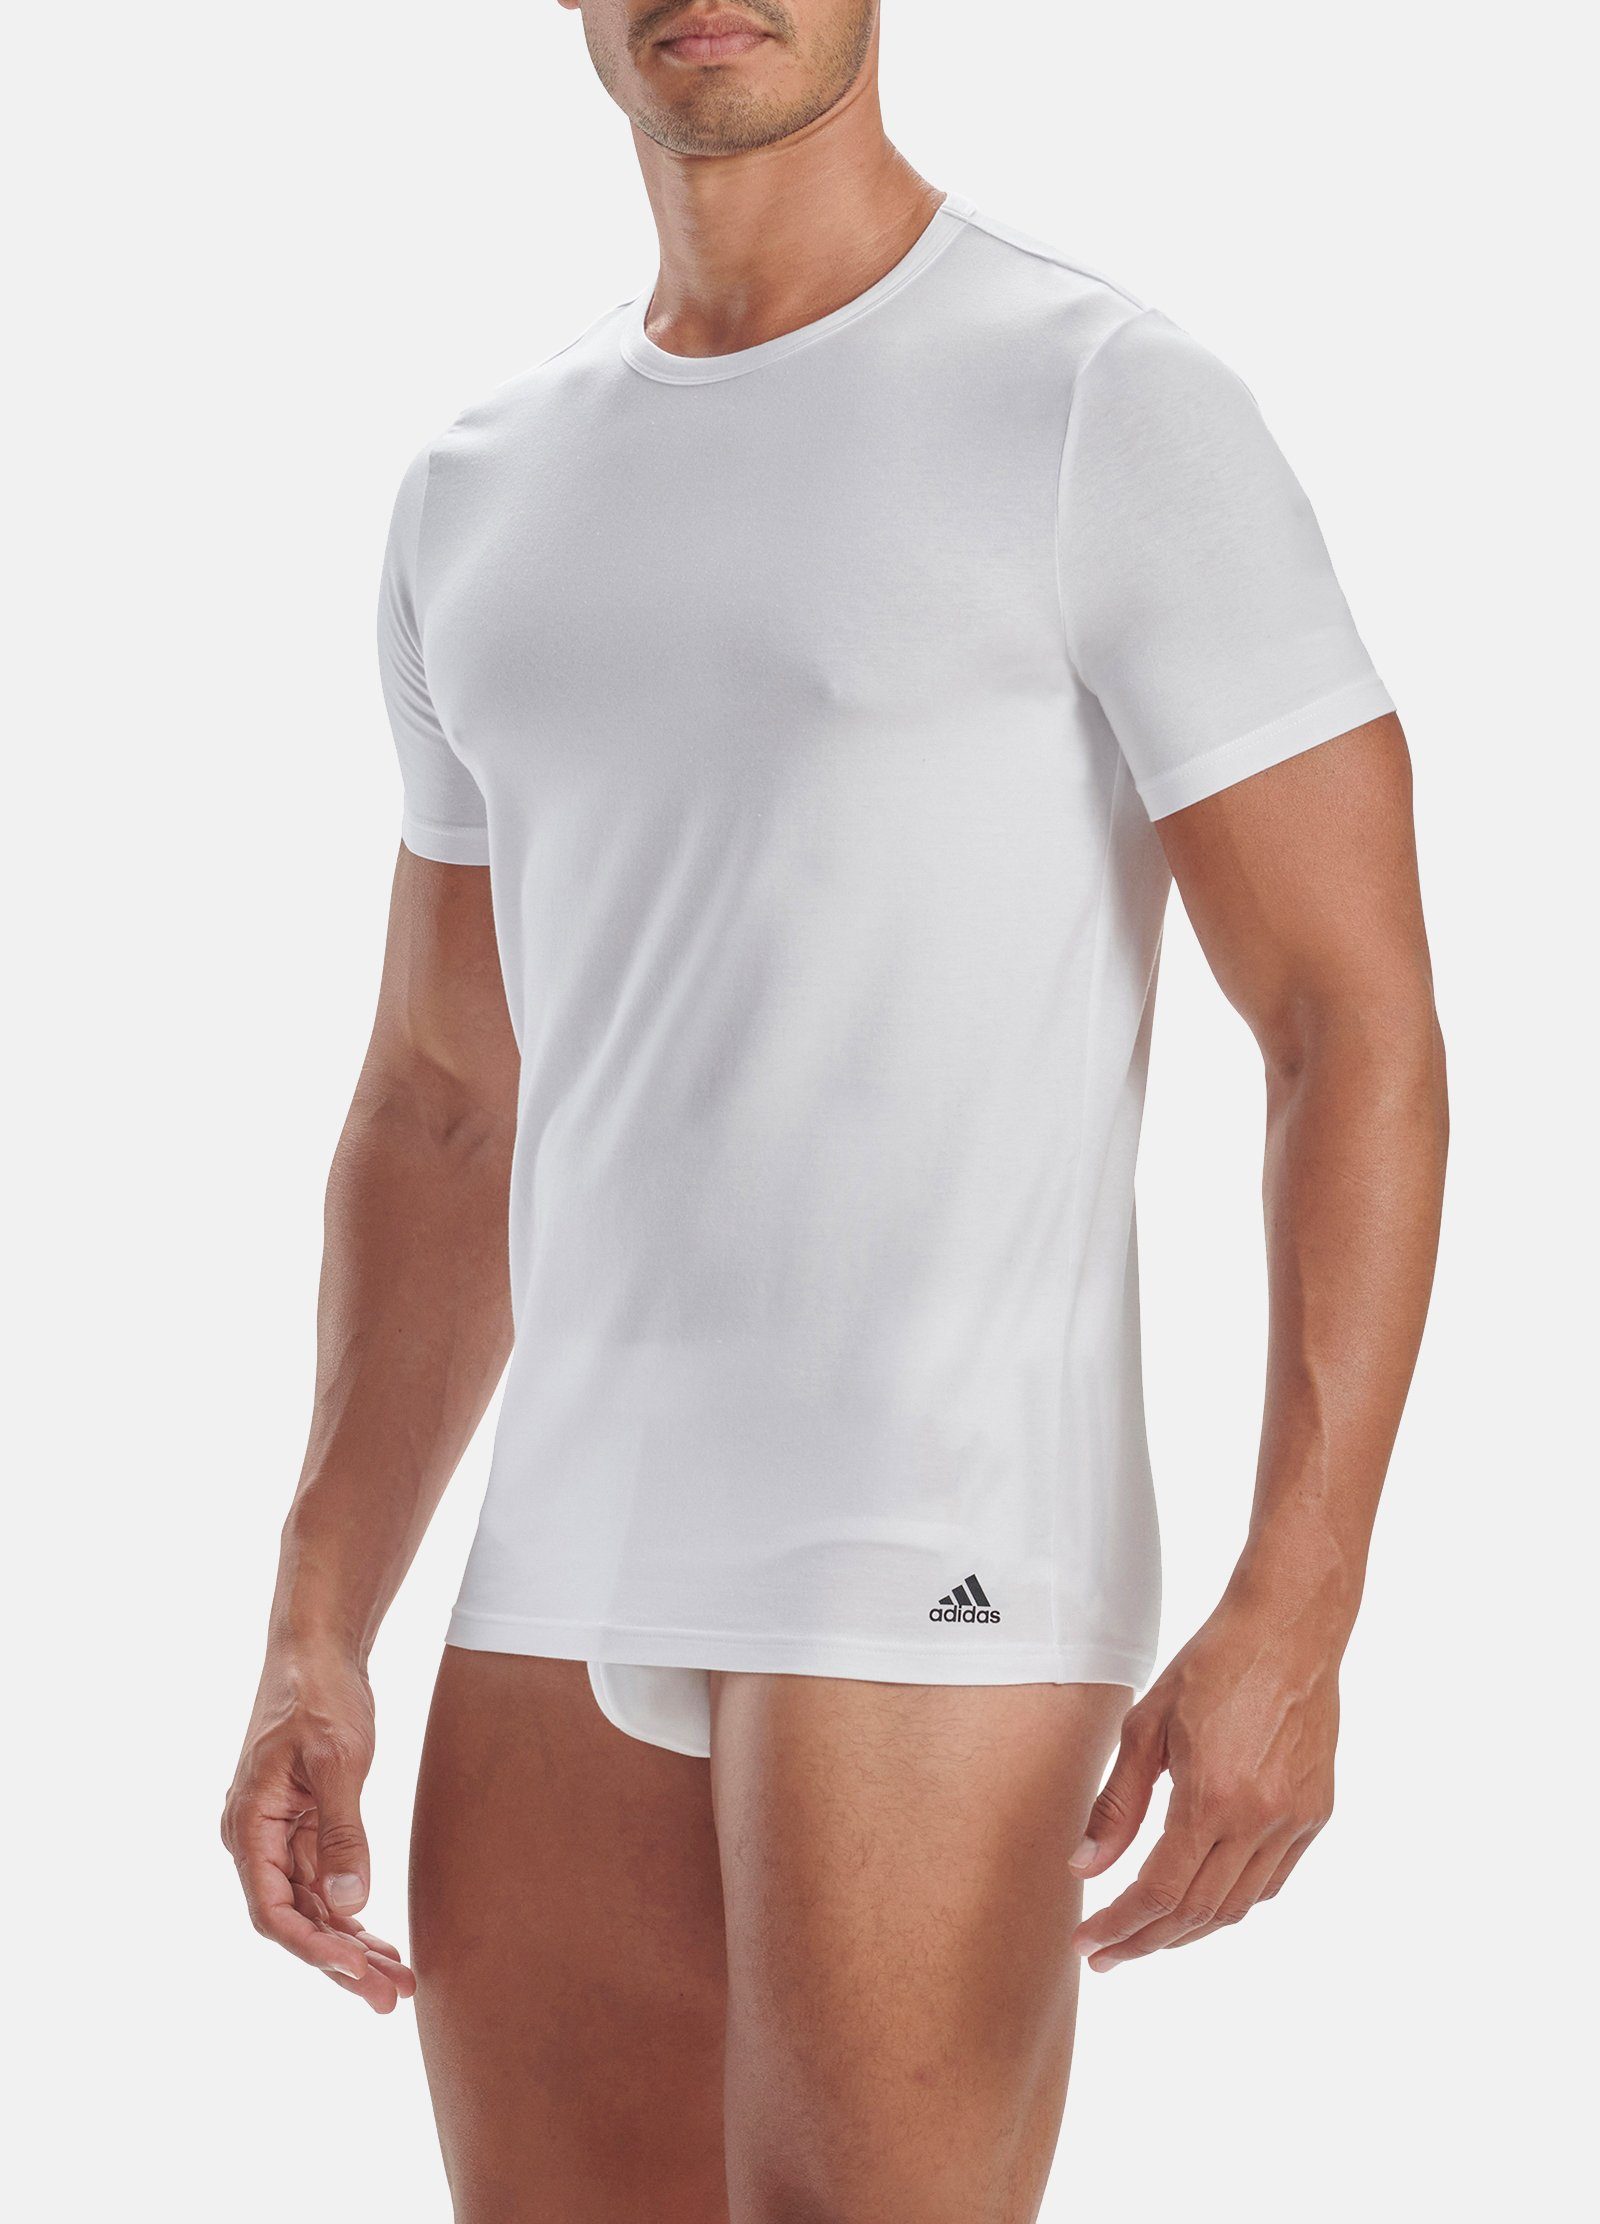 T-Shirt (8PK) White Performance Neck adidas Poloshirt Crew